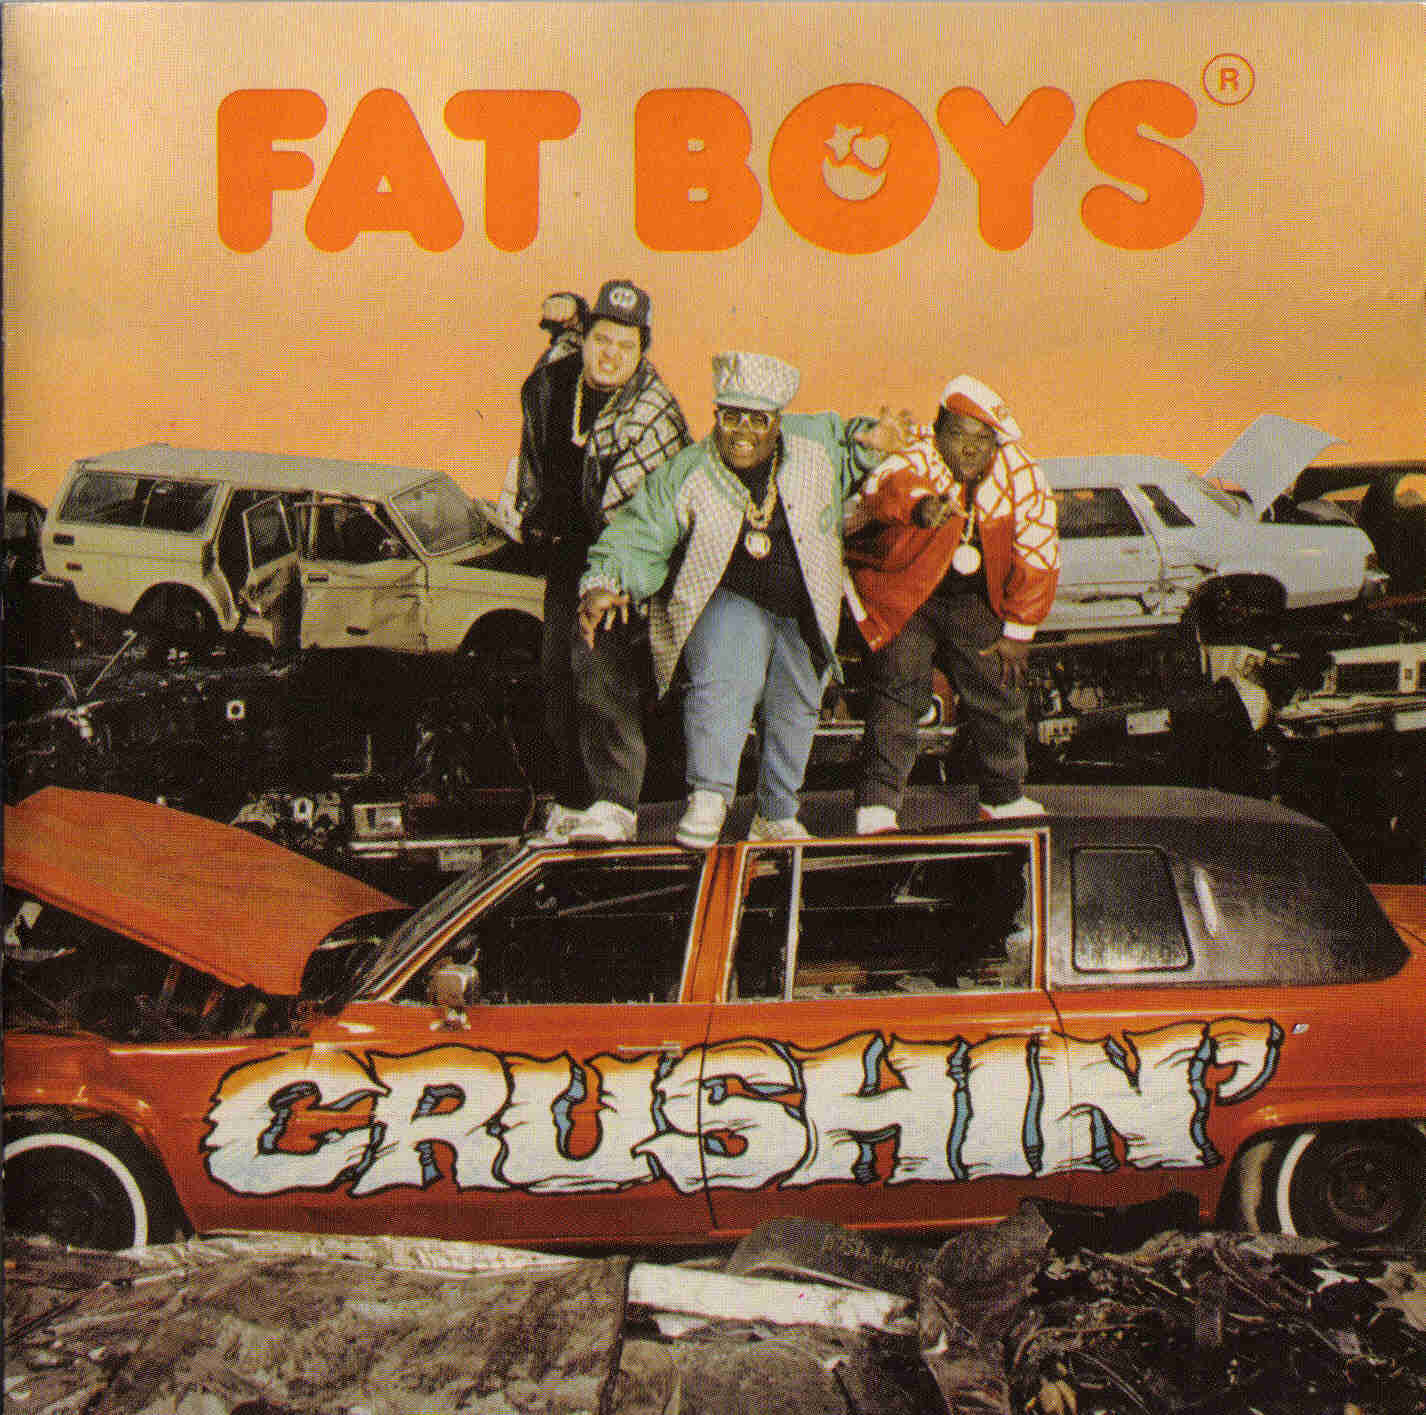 Fat Boys - Crushin' (CD) (1987) (FLAC + 320 kbps)